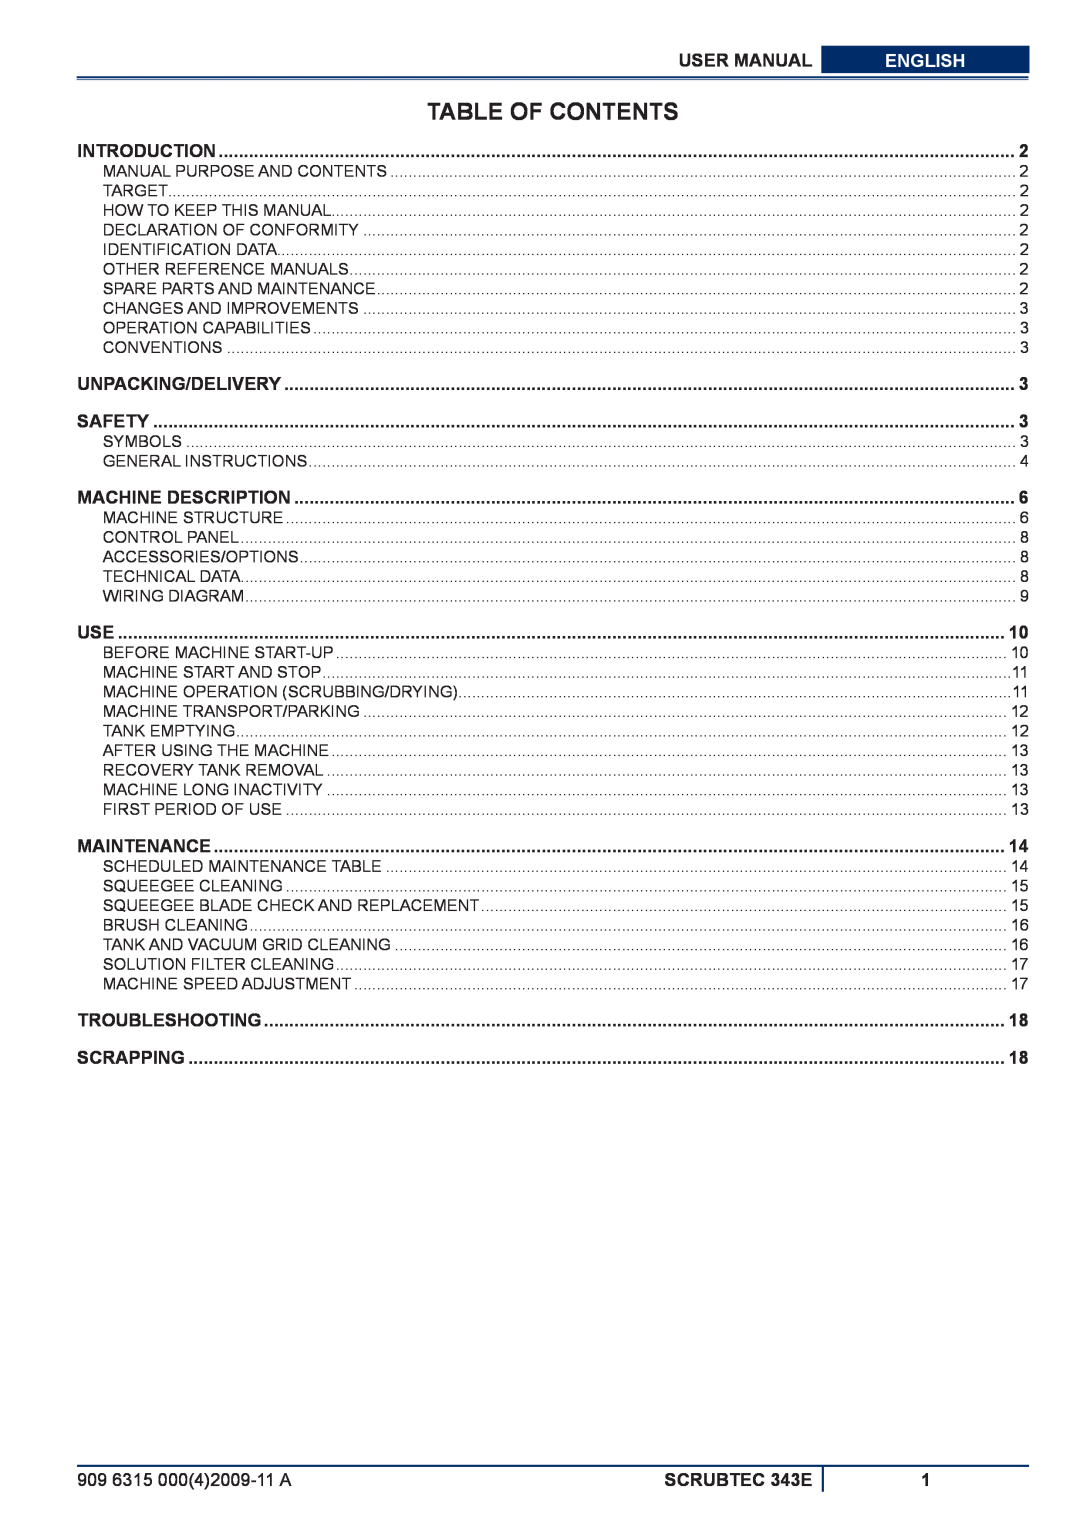 Nilfisk-ALTO manuel dutilisation Table Of Contents, User Manual, English, 909 6315 00042009-11A, SCRUBTEC 343E 